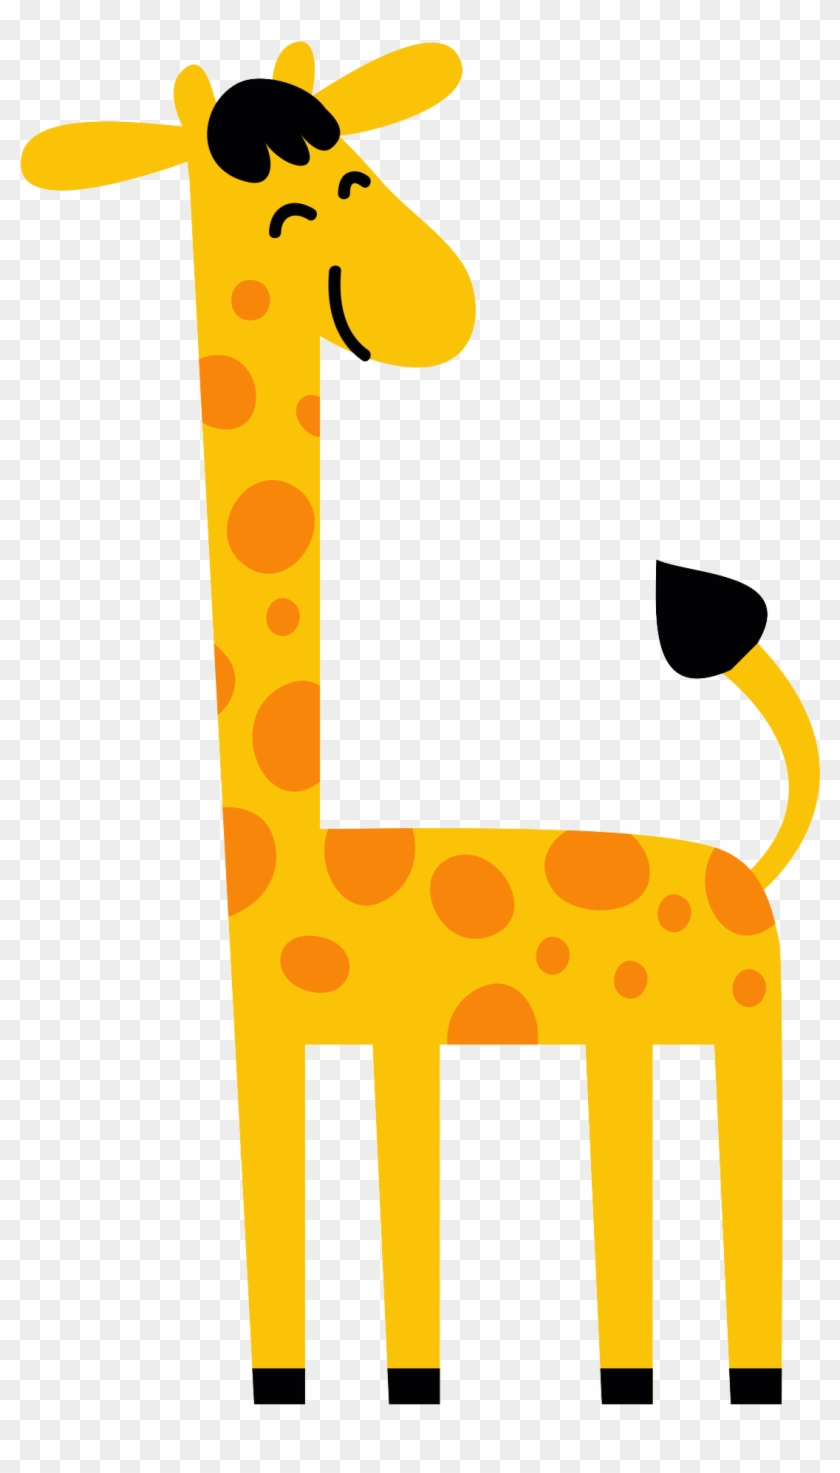 Cartoon Giraffe Picture - Hươu Cao Cổ Hoạt Hình, HD Png Download -  2362x2362(#6039629) - PngFind